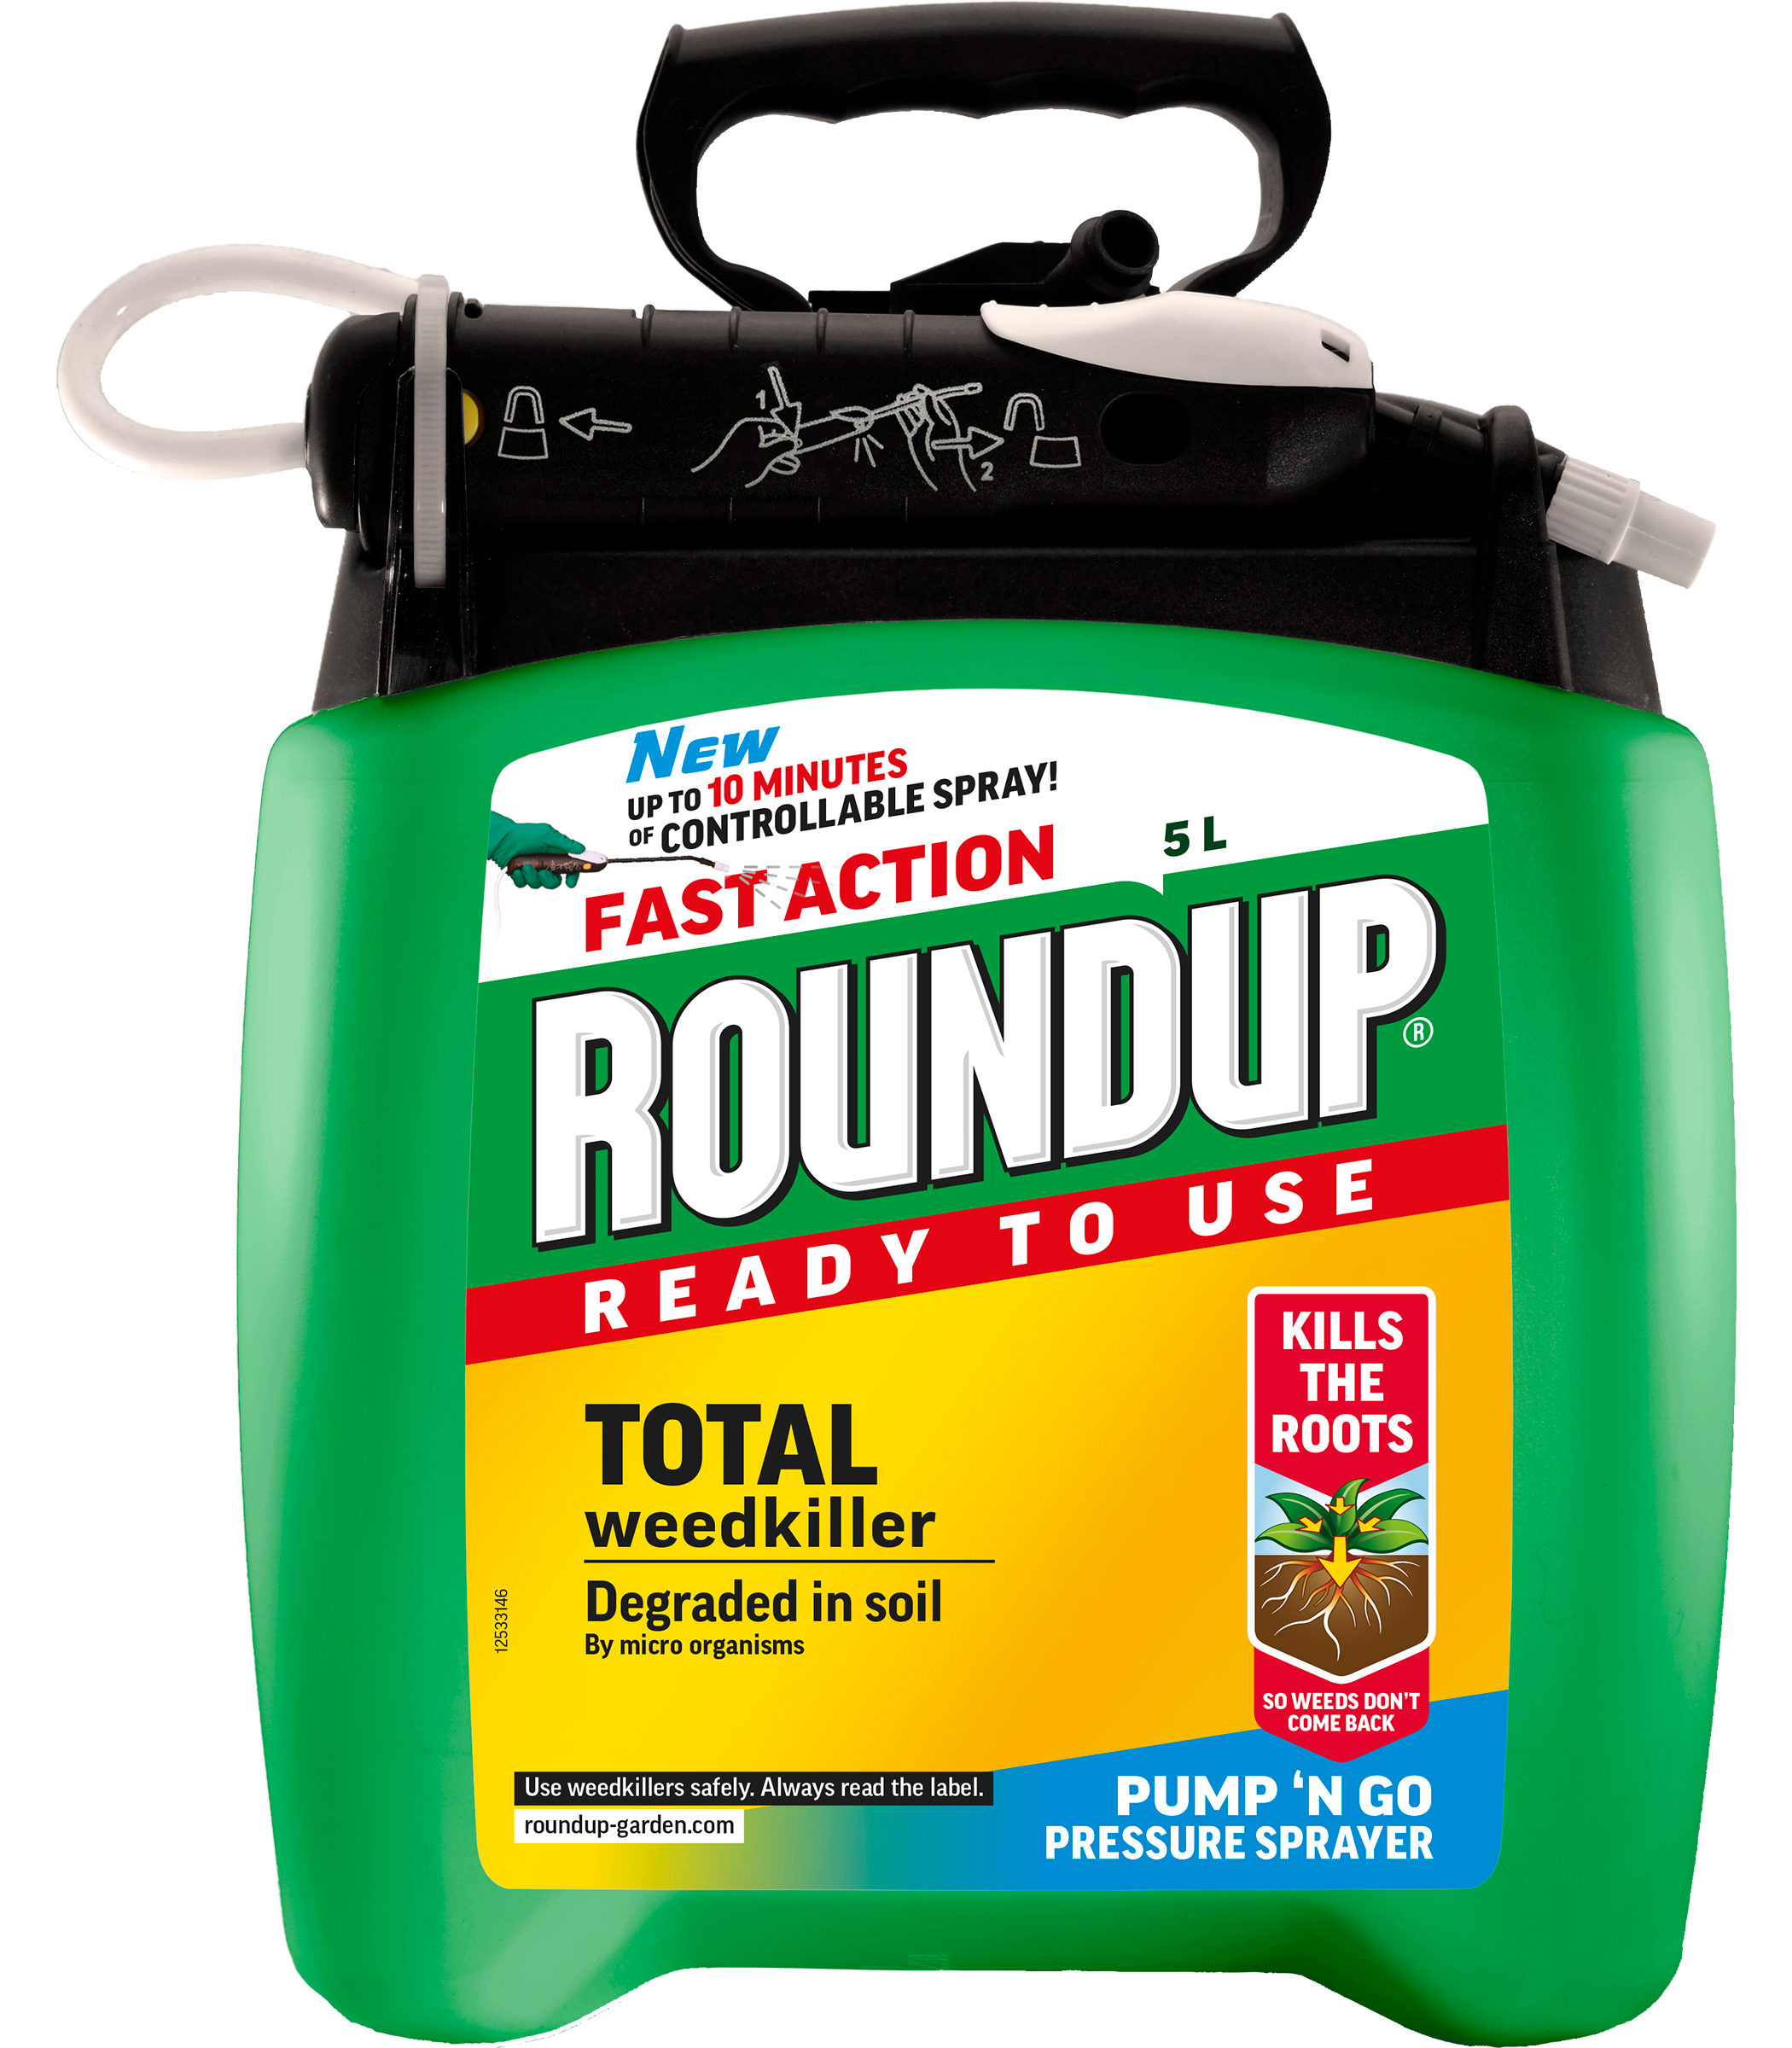 Roundup® Total Pump 'n Go 5L